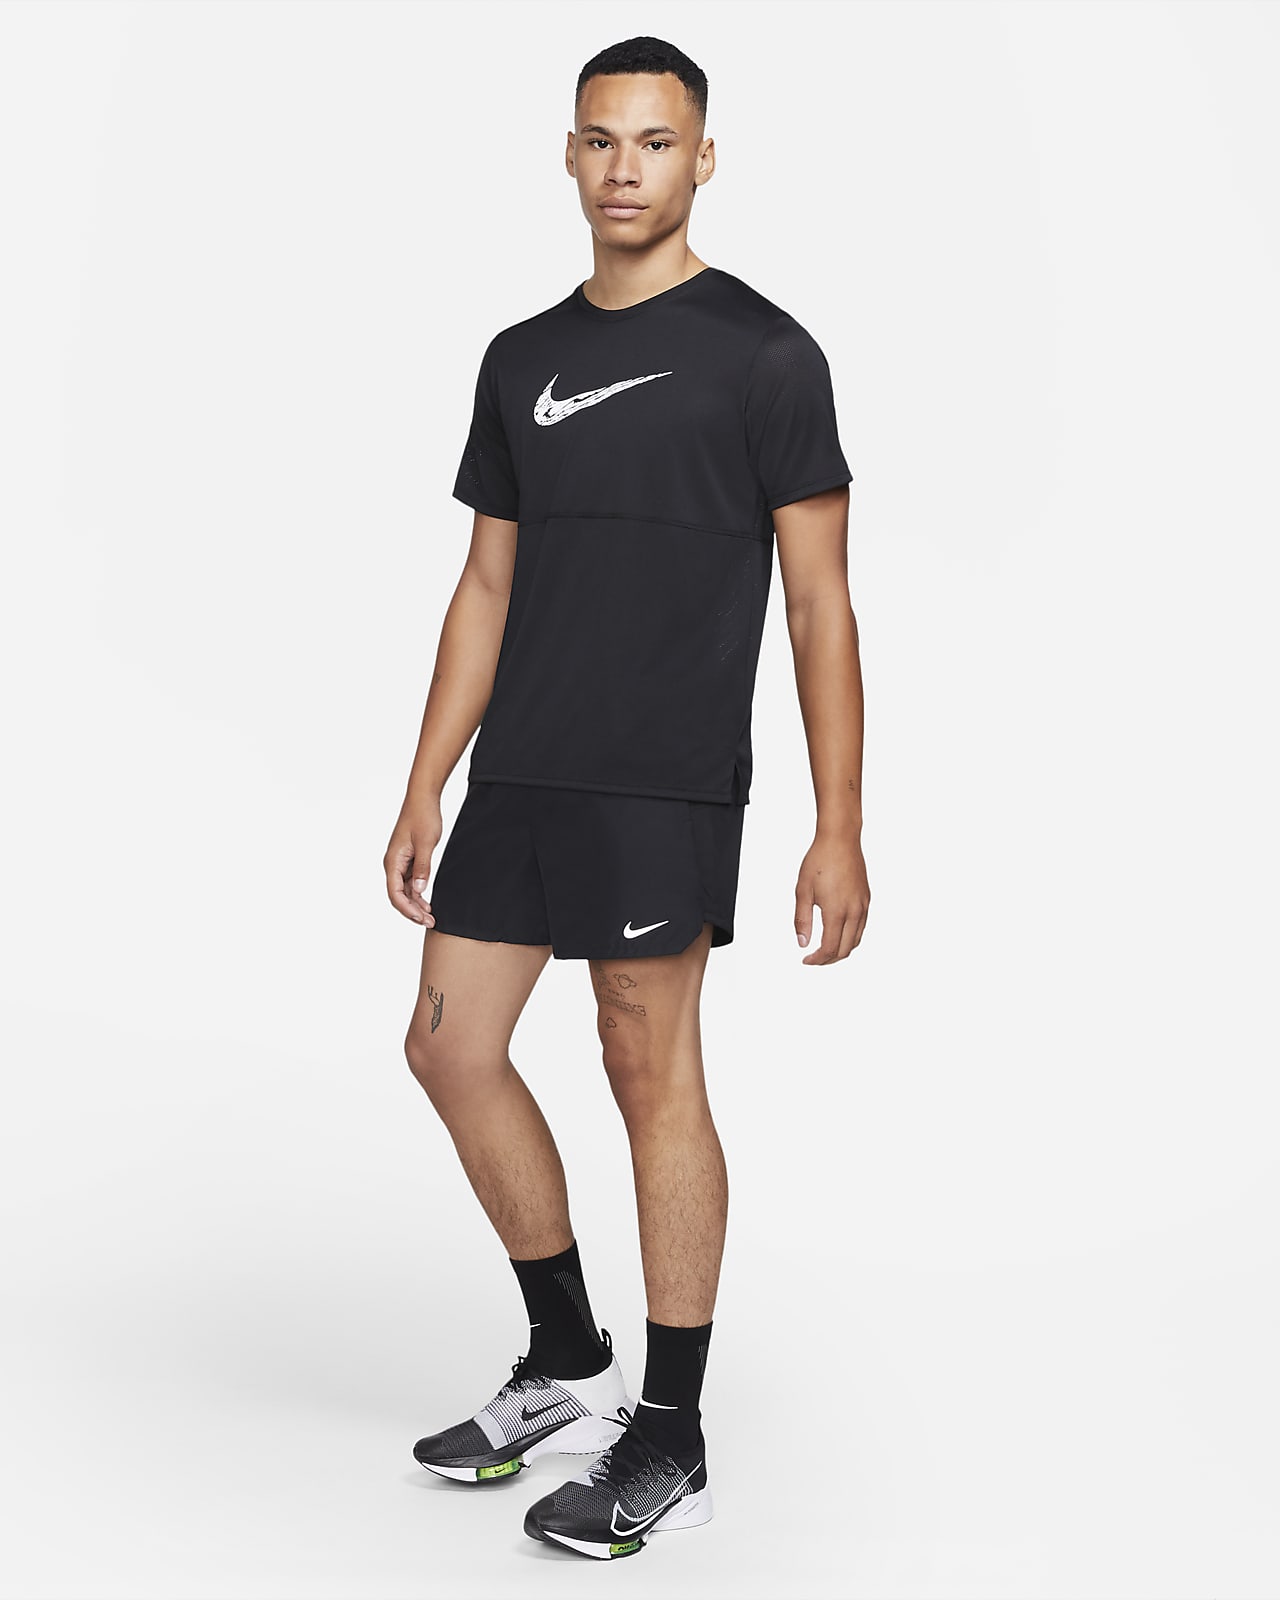 Shorts Nike Challenger 5 Run Division Masculino